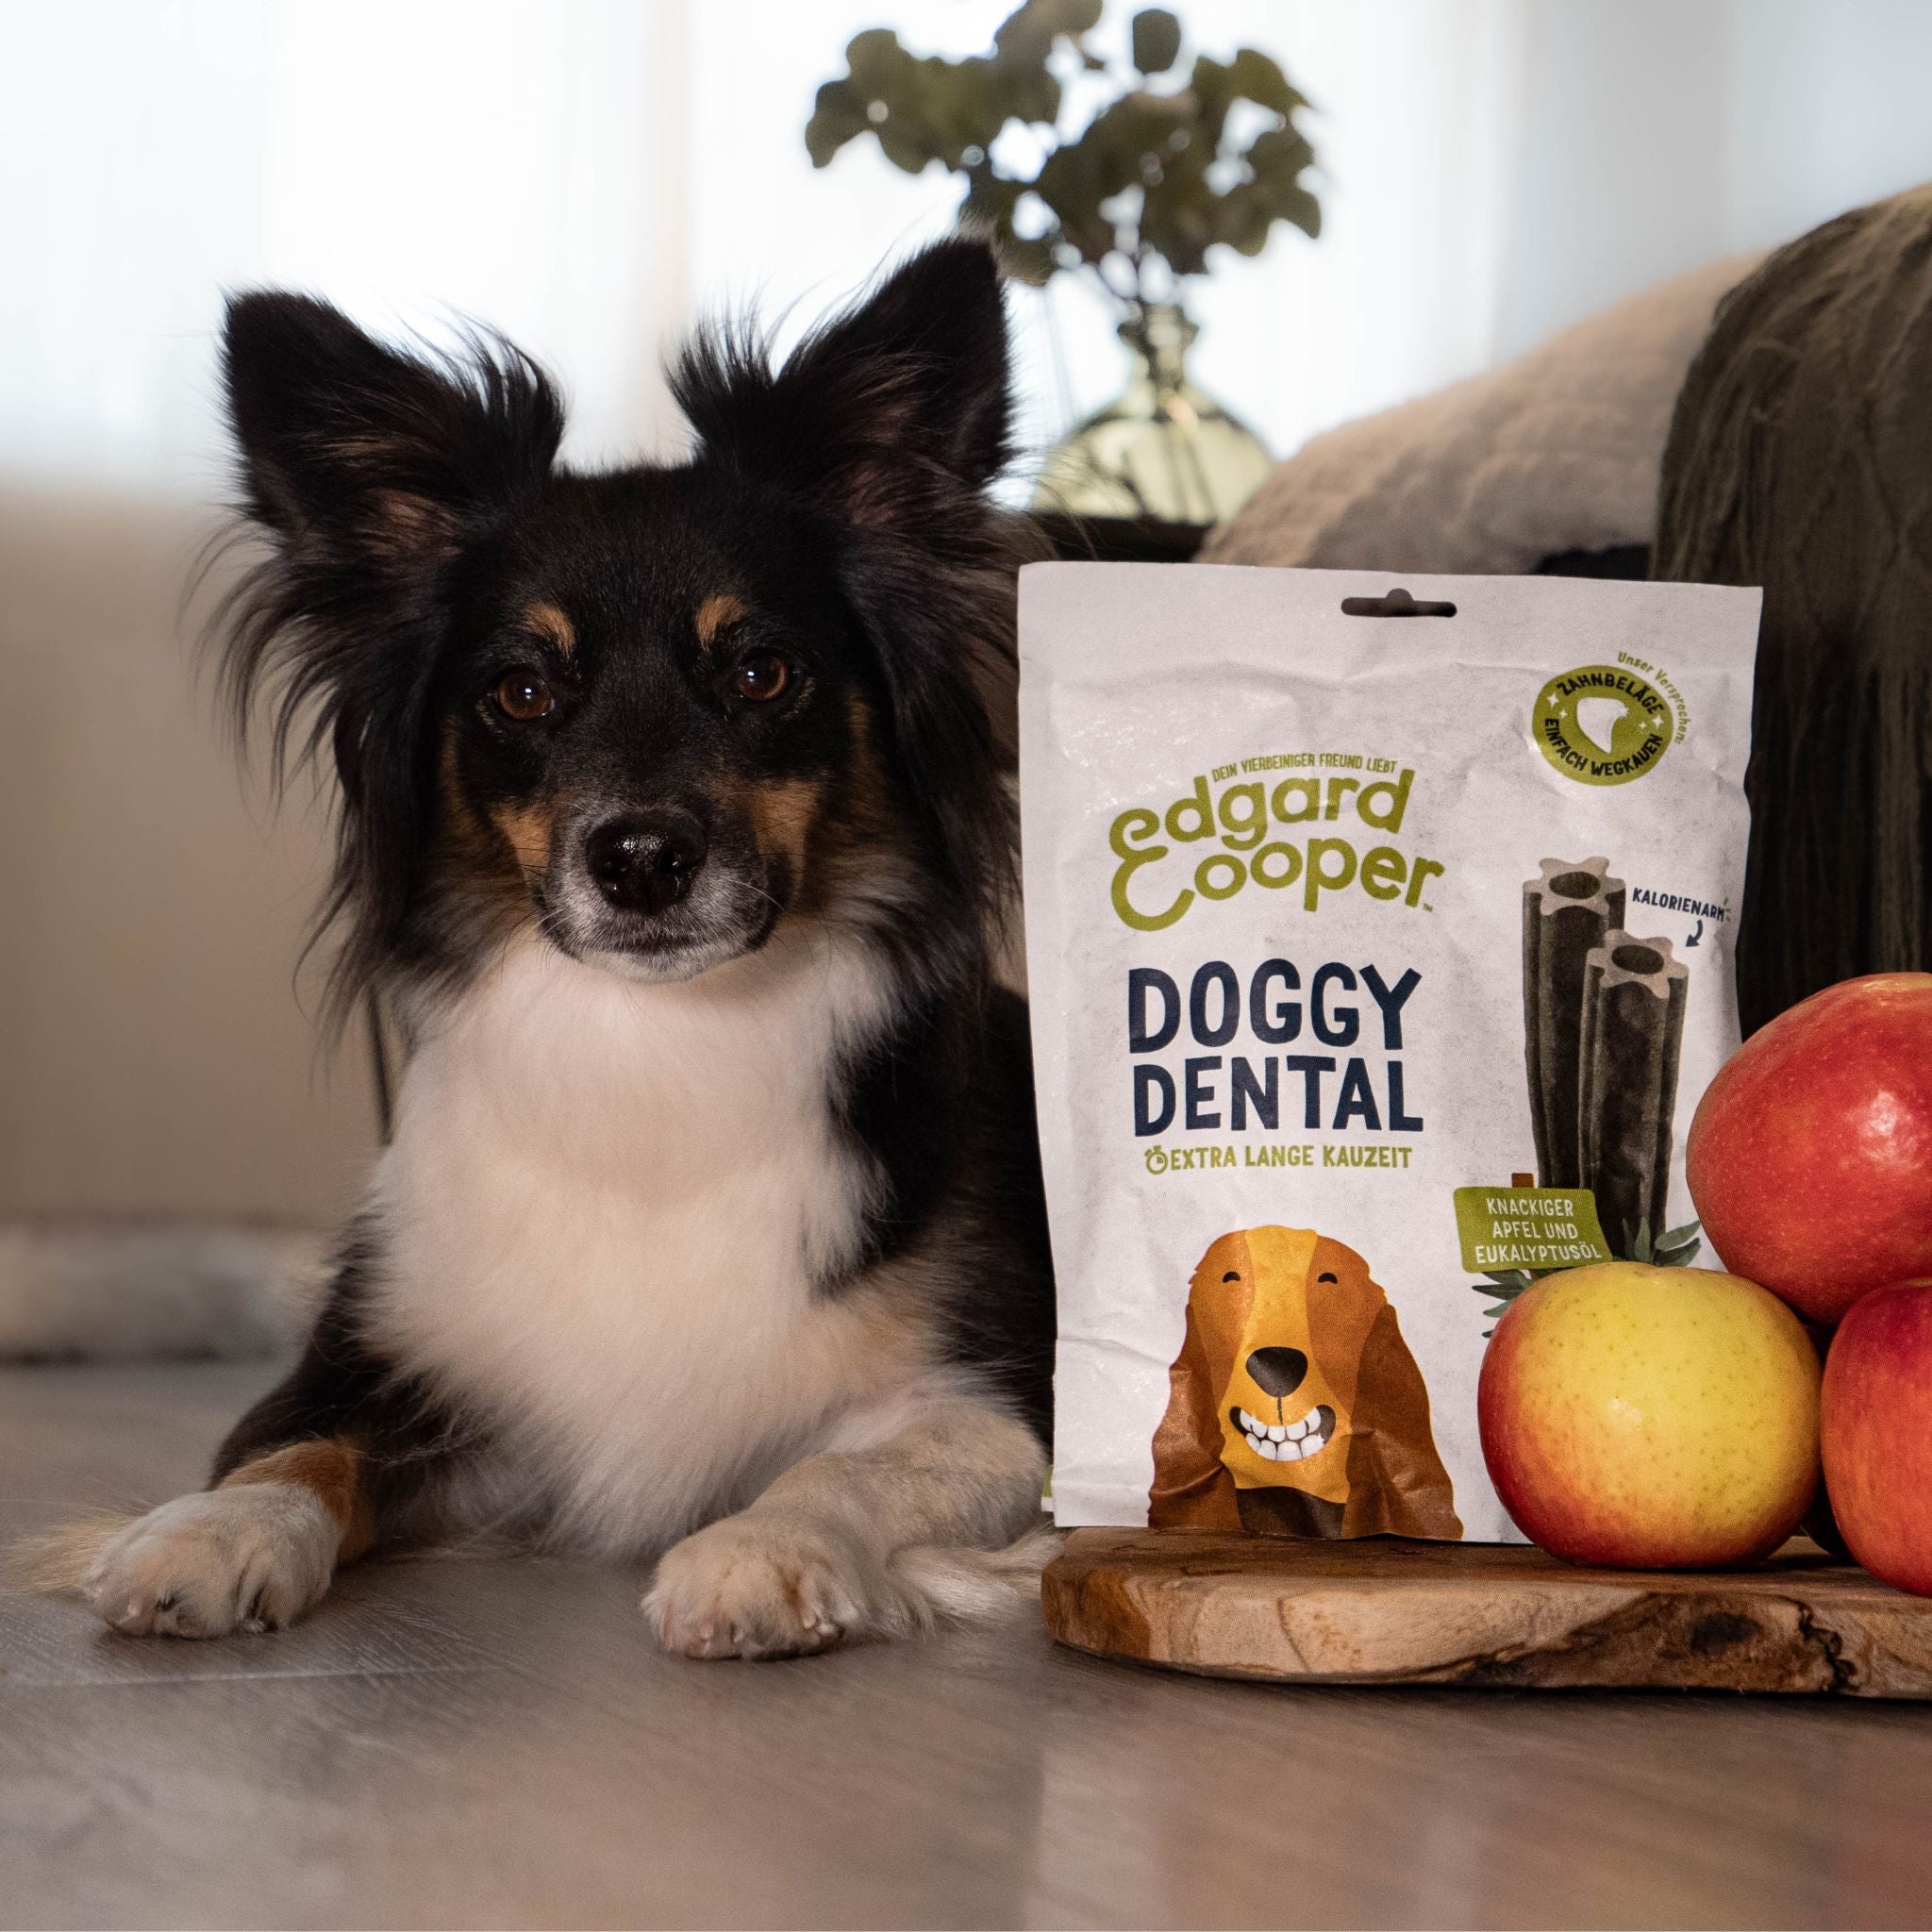 Edgard & Cooper Doggy Dentals - Kausticks mit Apfel & Eukalyptus